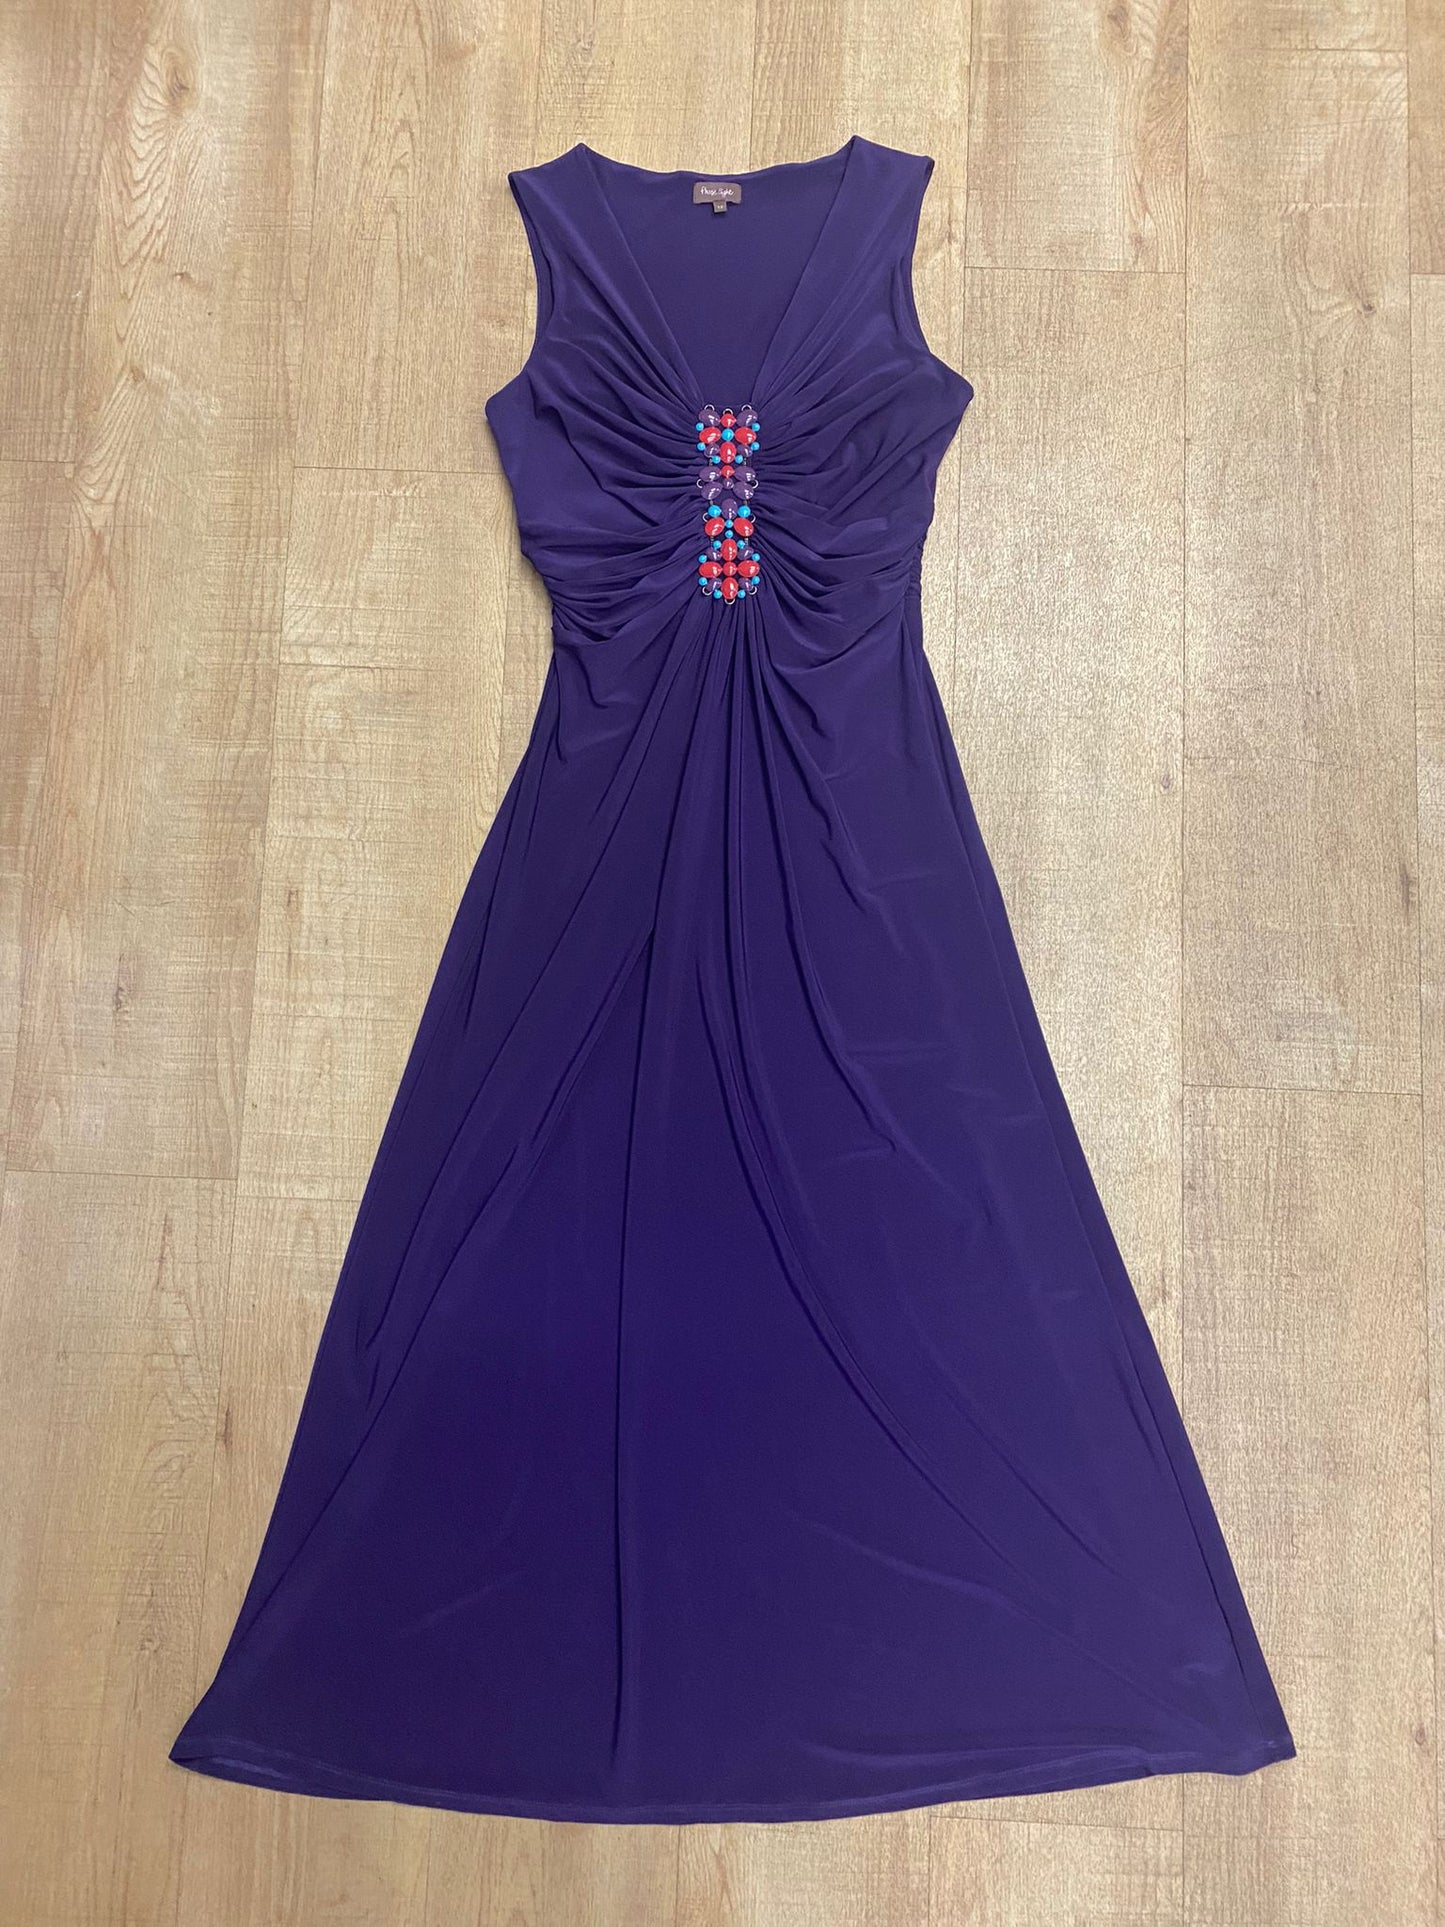 Phase Eight Purple Beaded Maxi-Dress Size 12